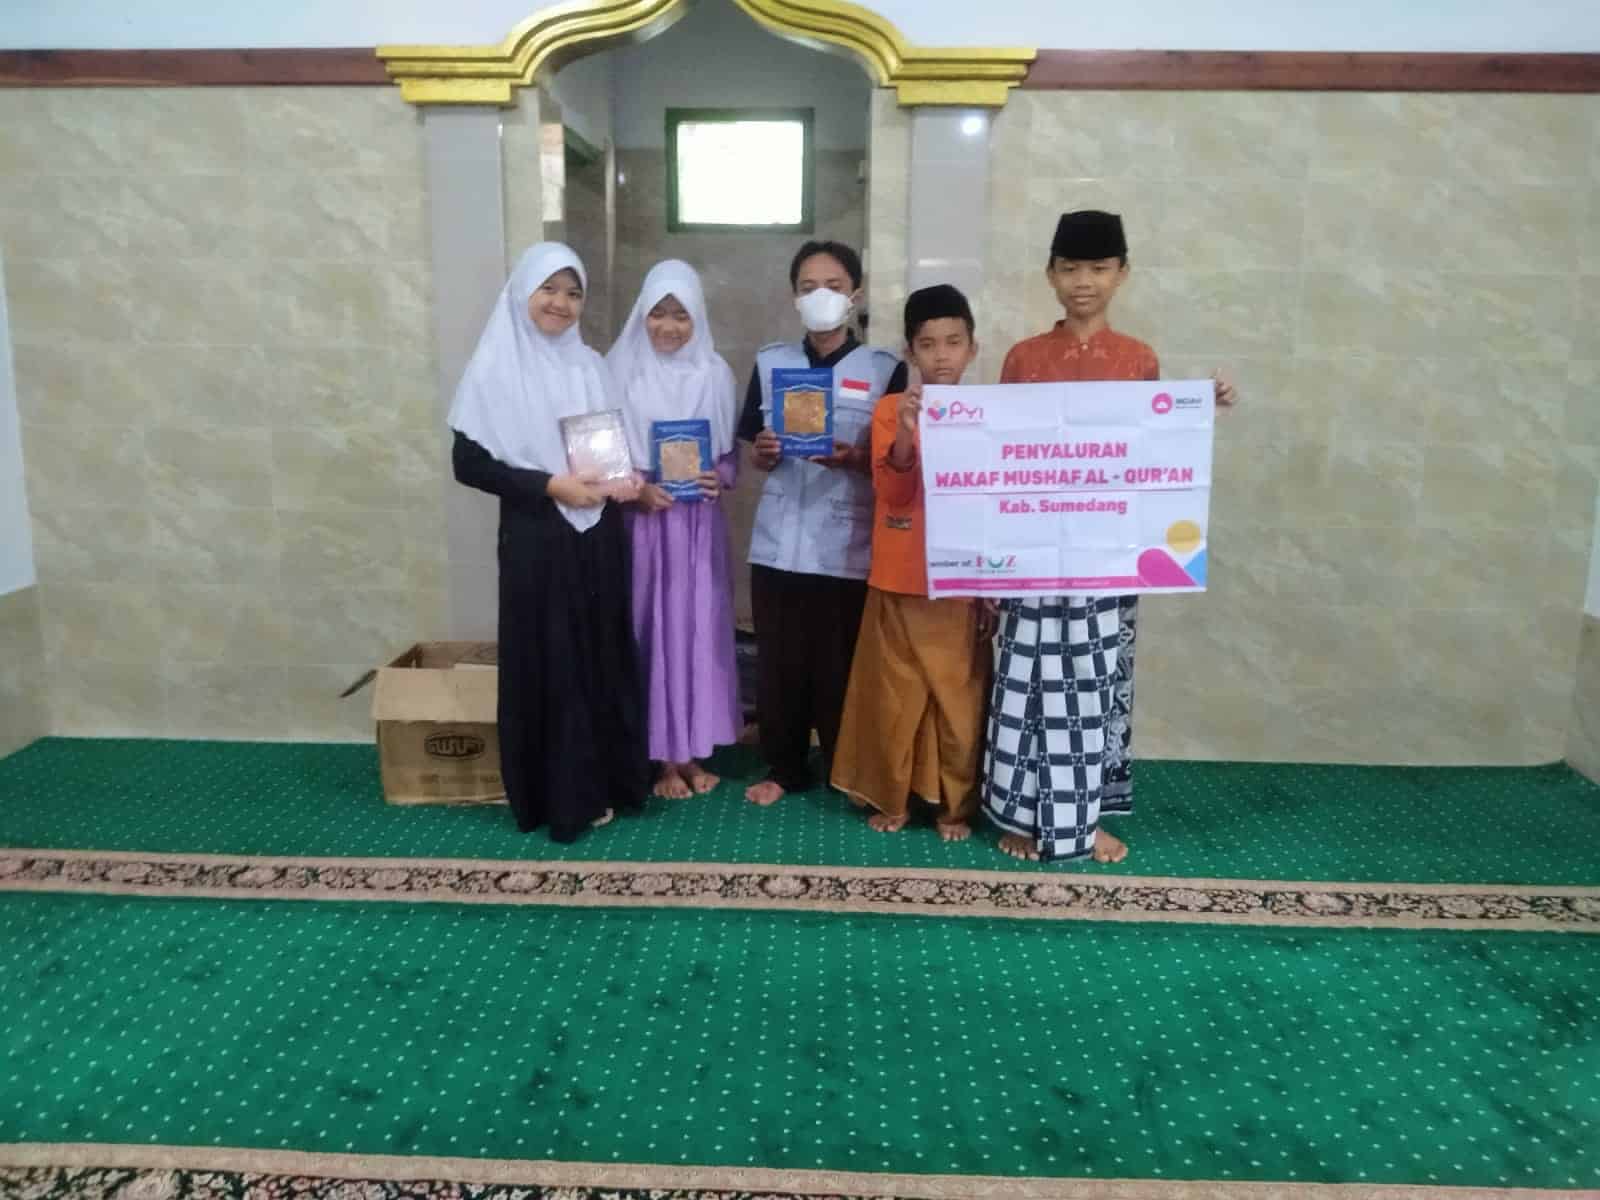 PYI Yatim dan Zakat Salurkan Puluhan Quran Untuk Masjid di Sumedang